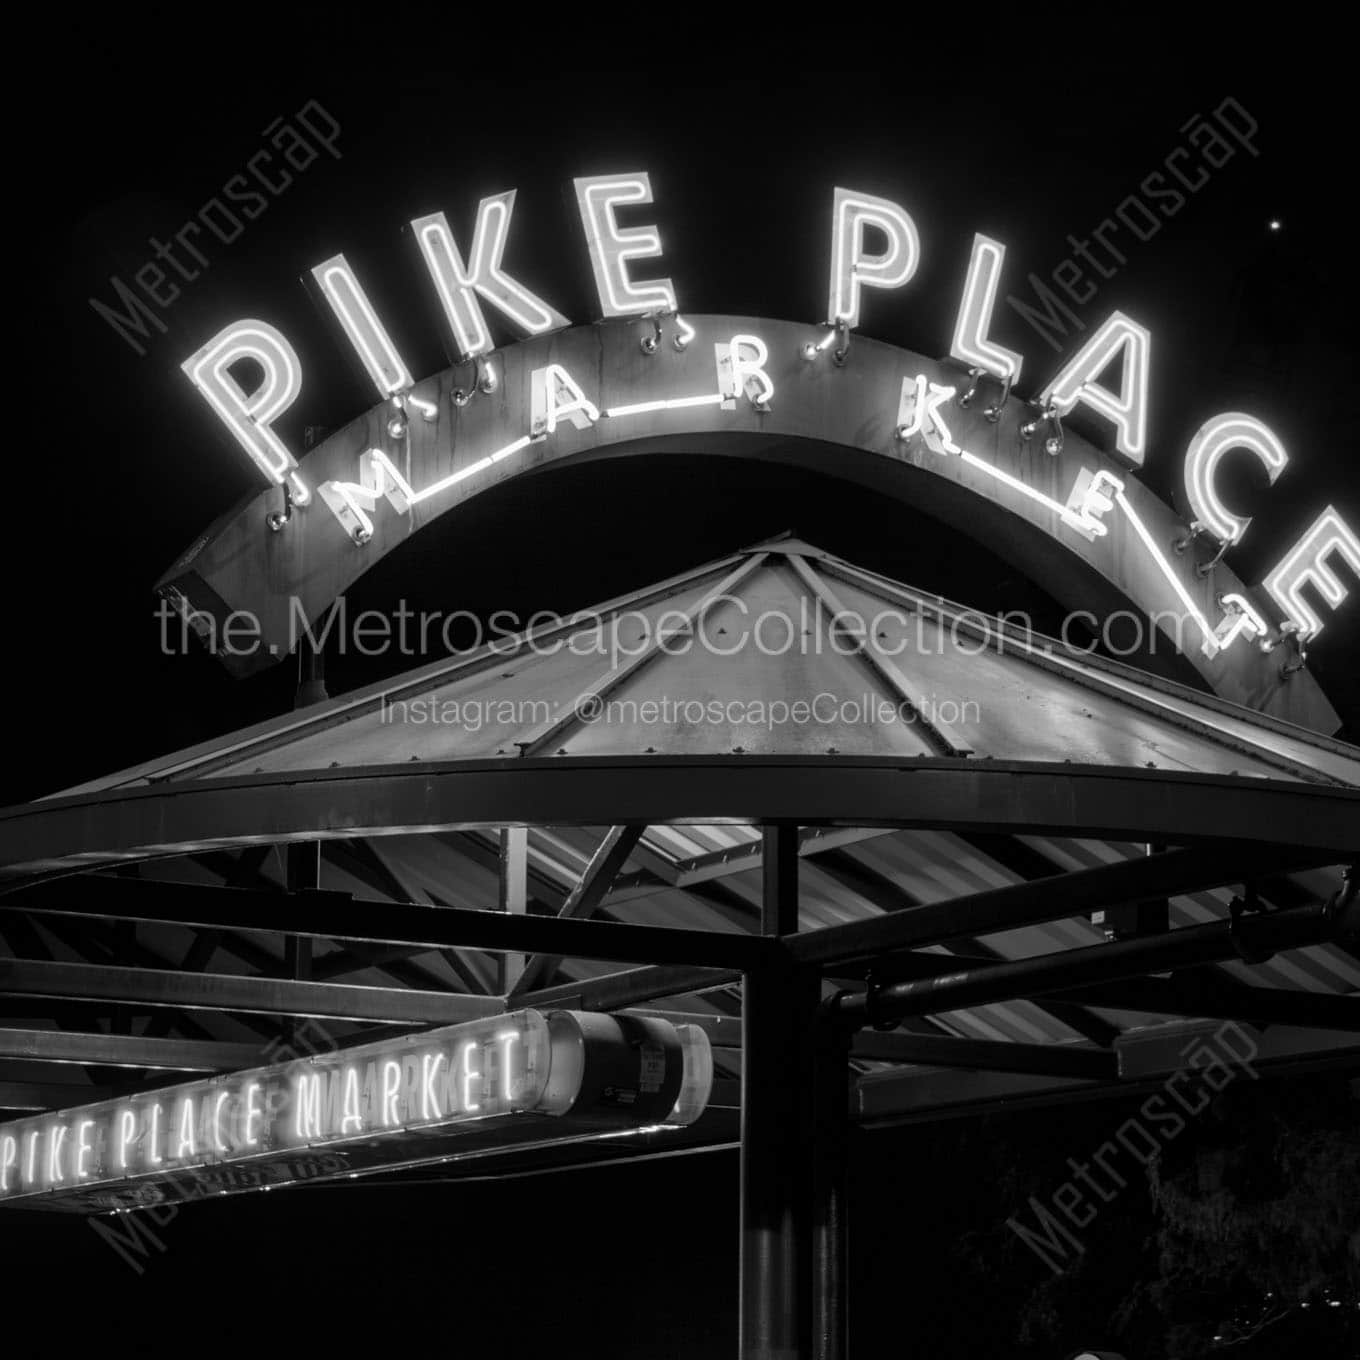 pike place market bus station Black & White Office Art